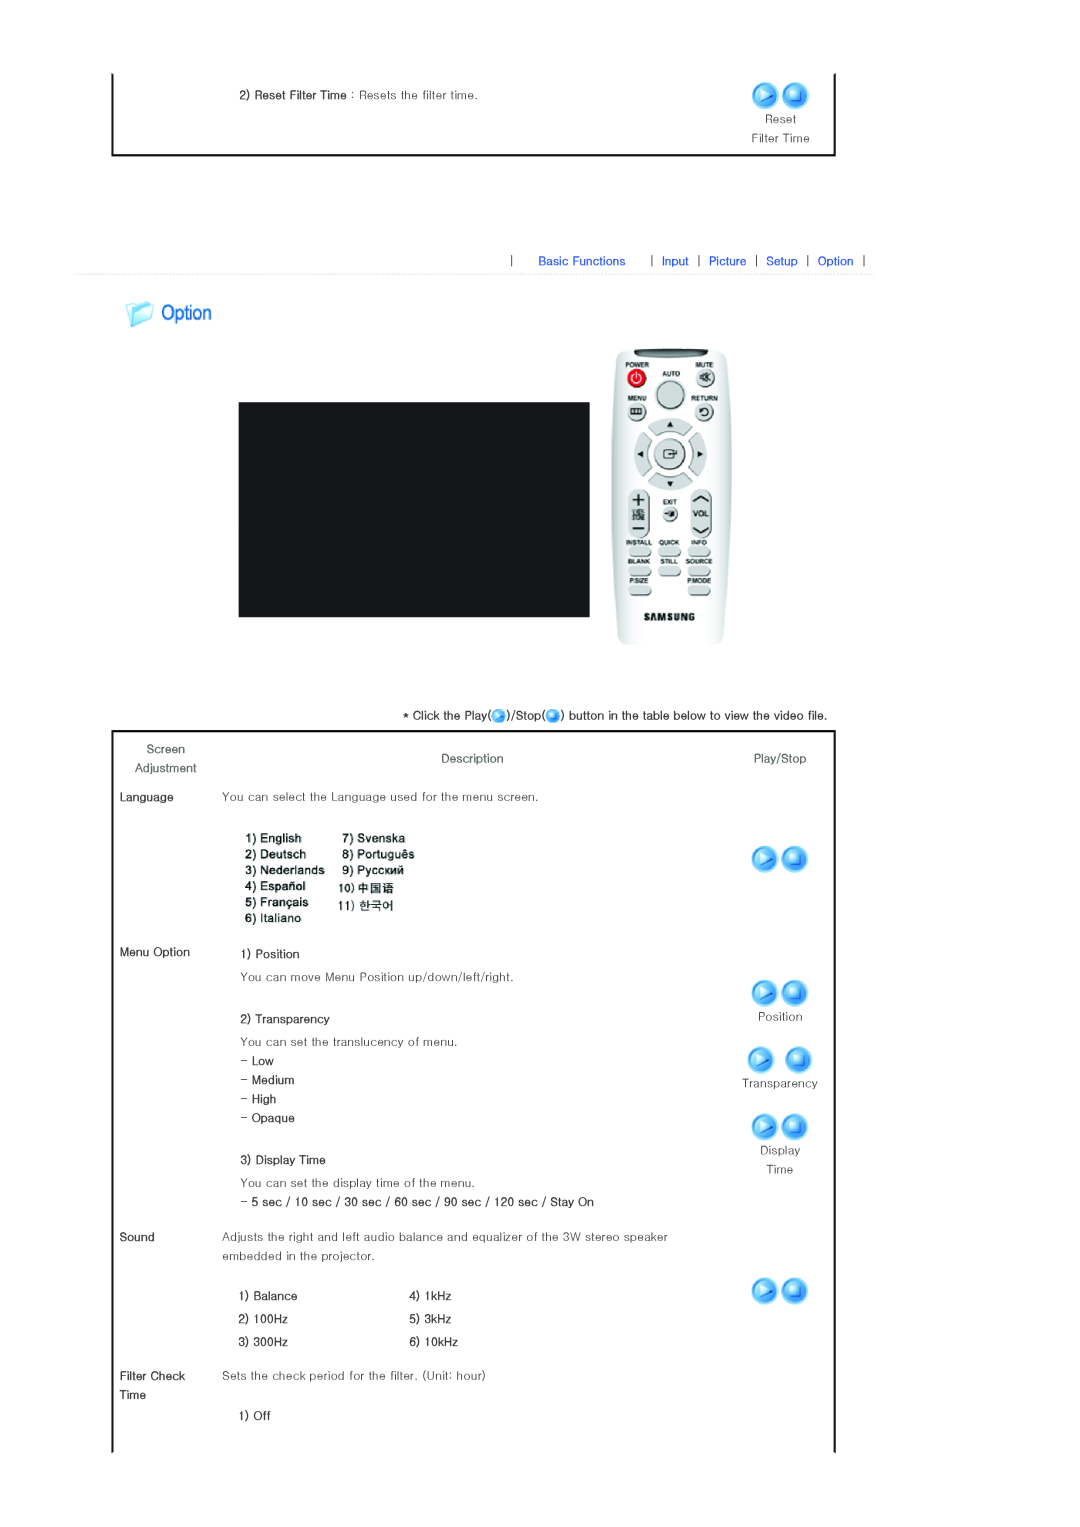 Sharp SP-L300 manual Screen Adjustment, Basic Functions, Input Picture Setup Option, Description, High 